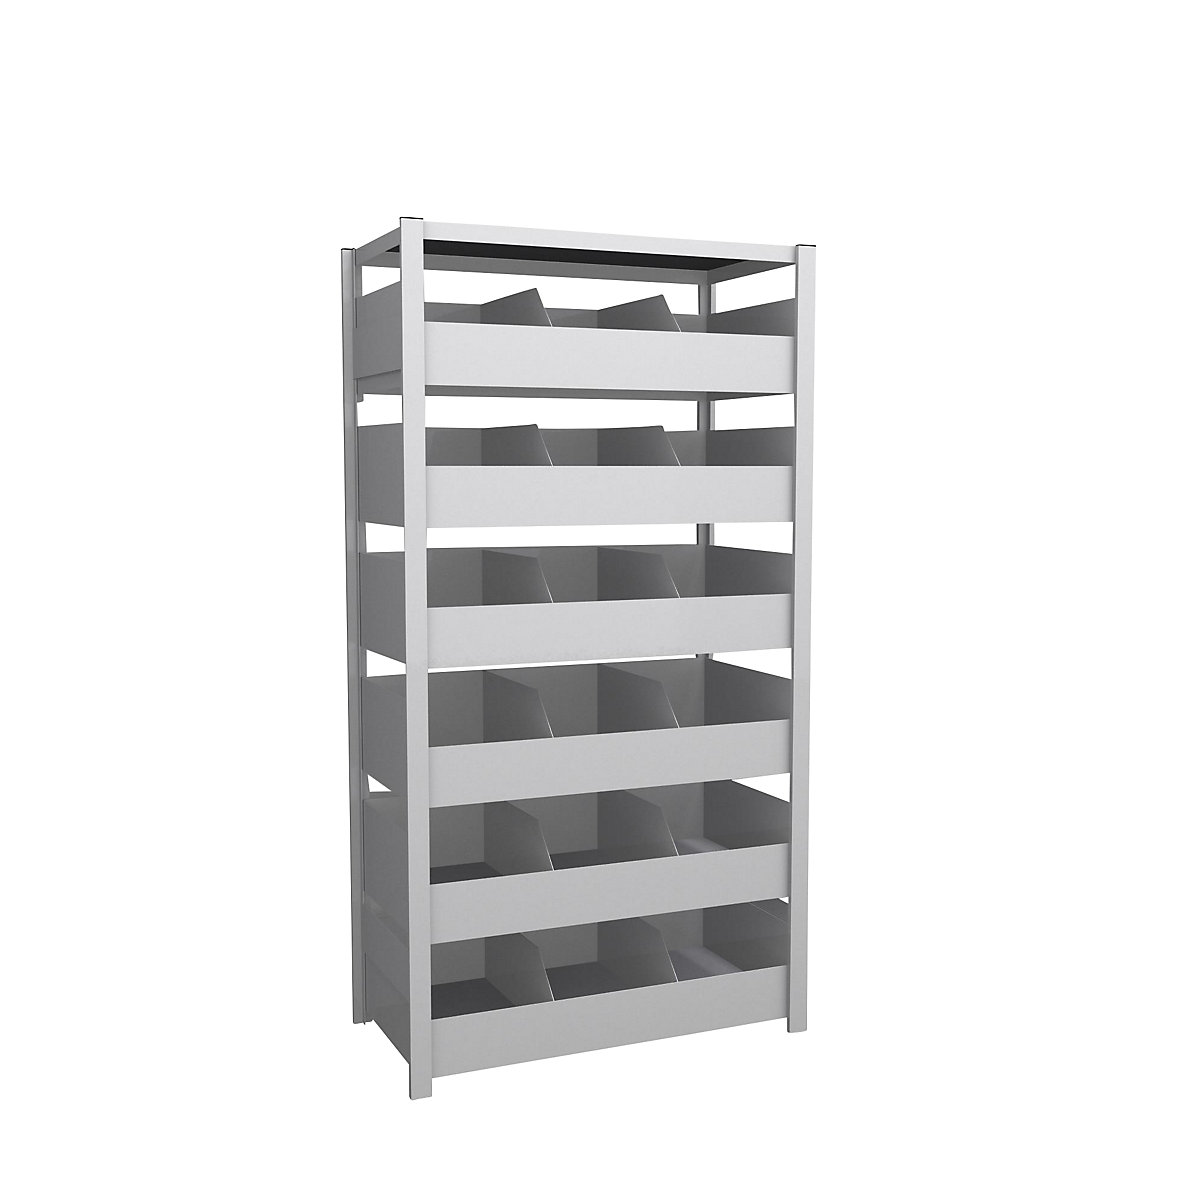 Bulk material shelving unit – hofe, shelf height 2000 mm, standard shelf unit, WxD 1060 x 535 mm